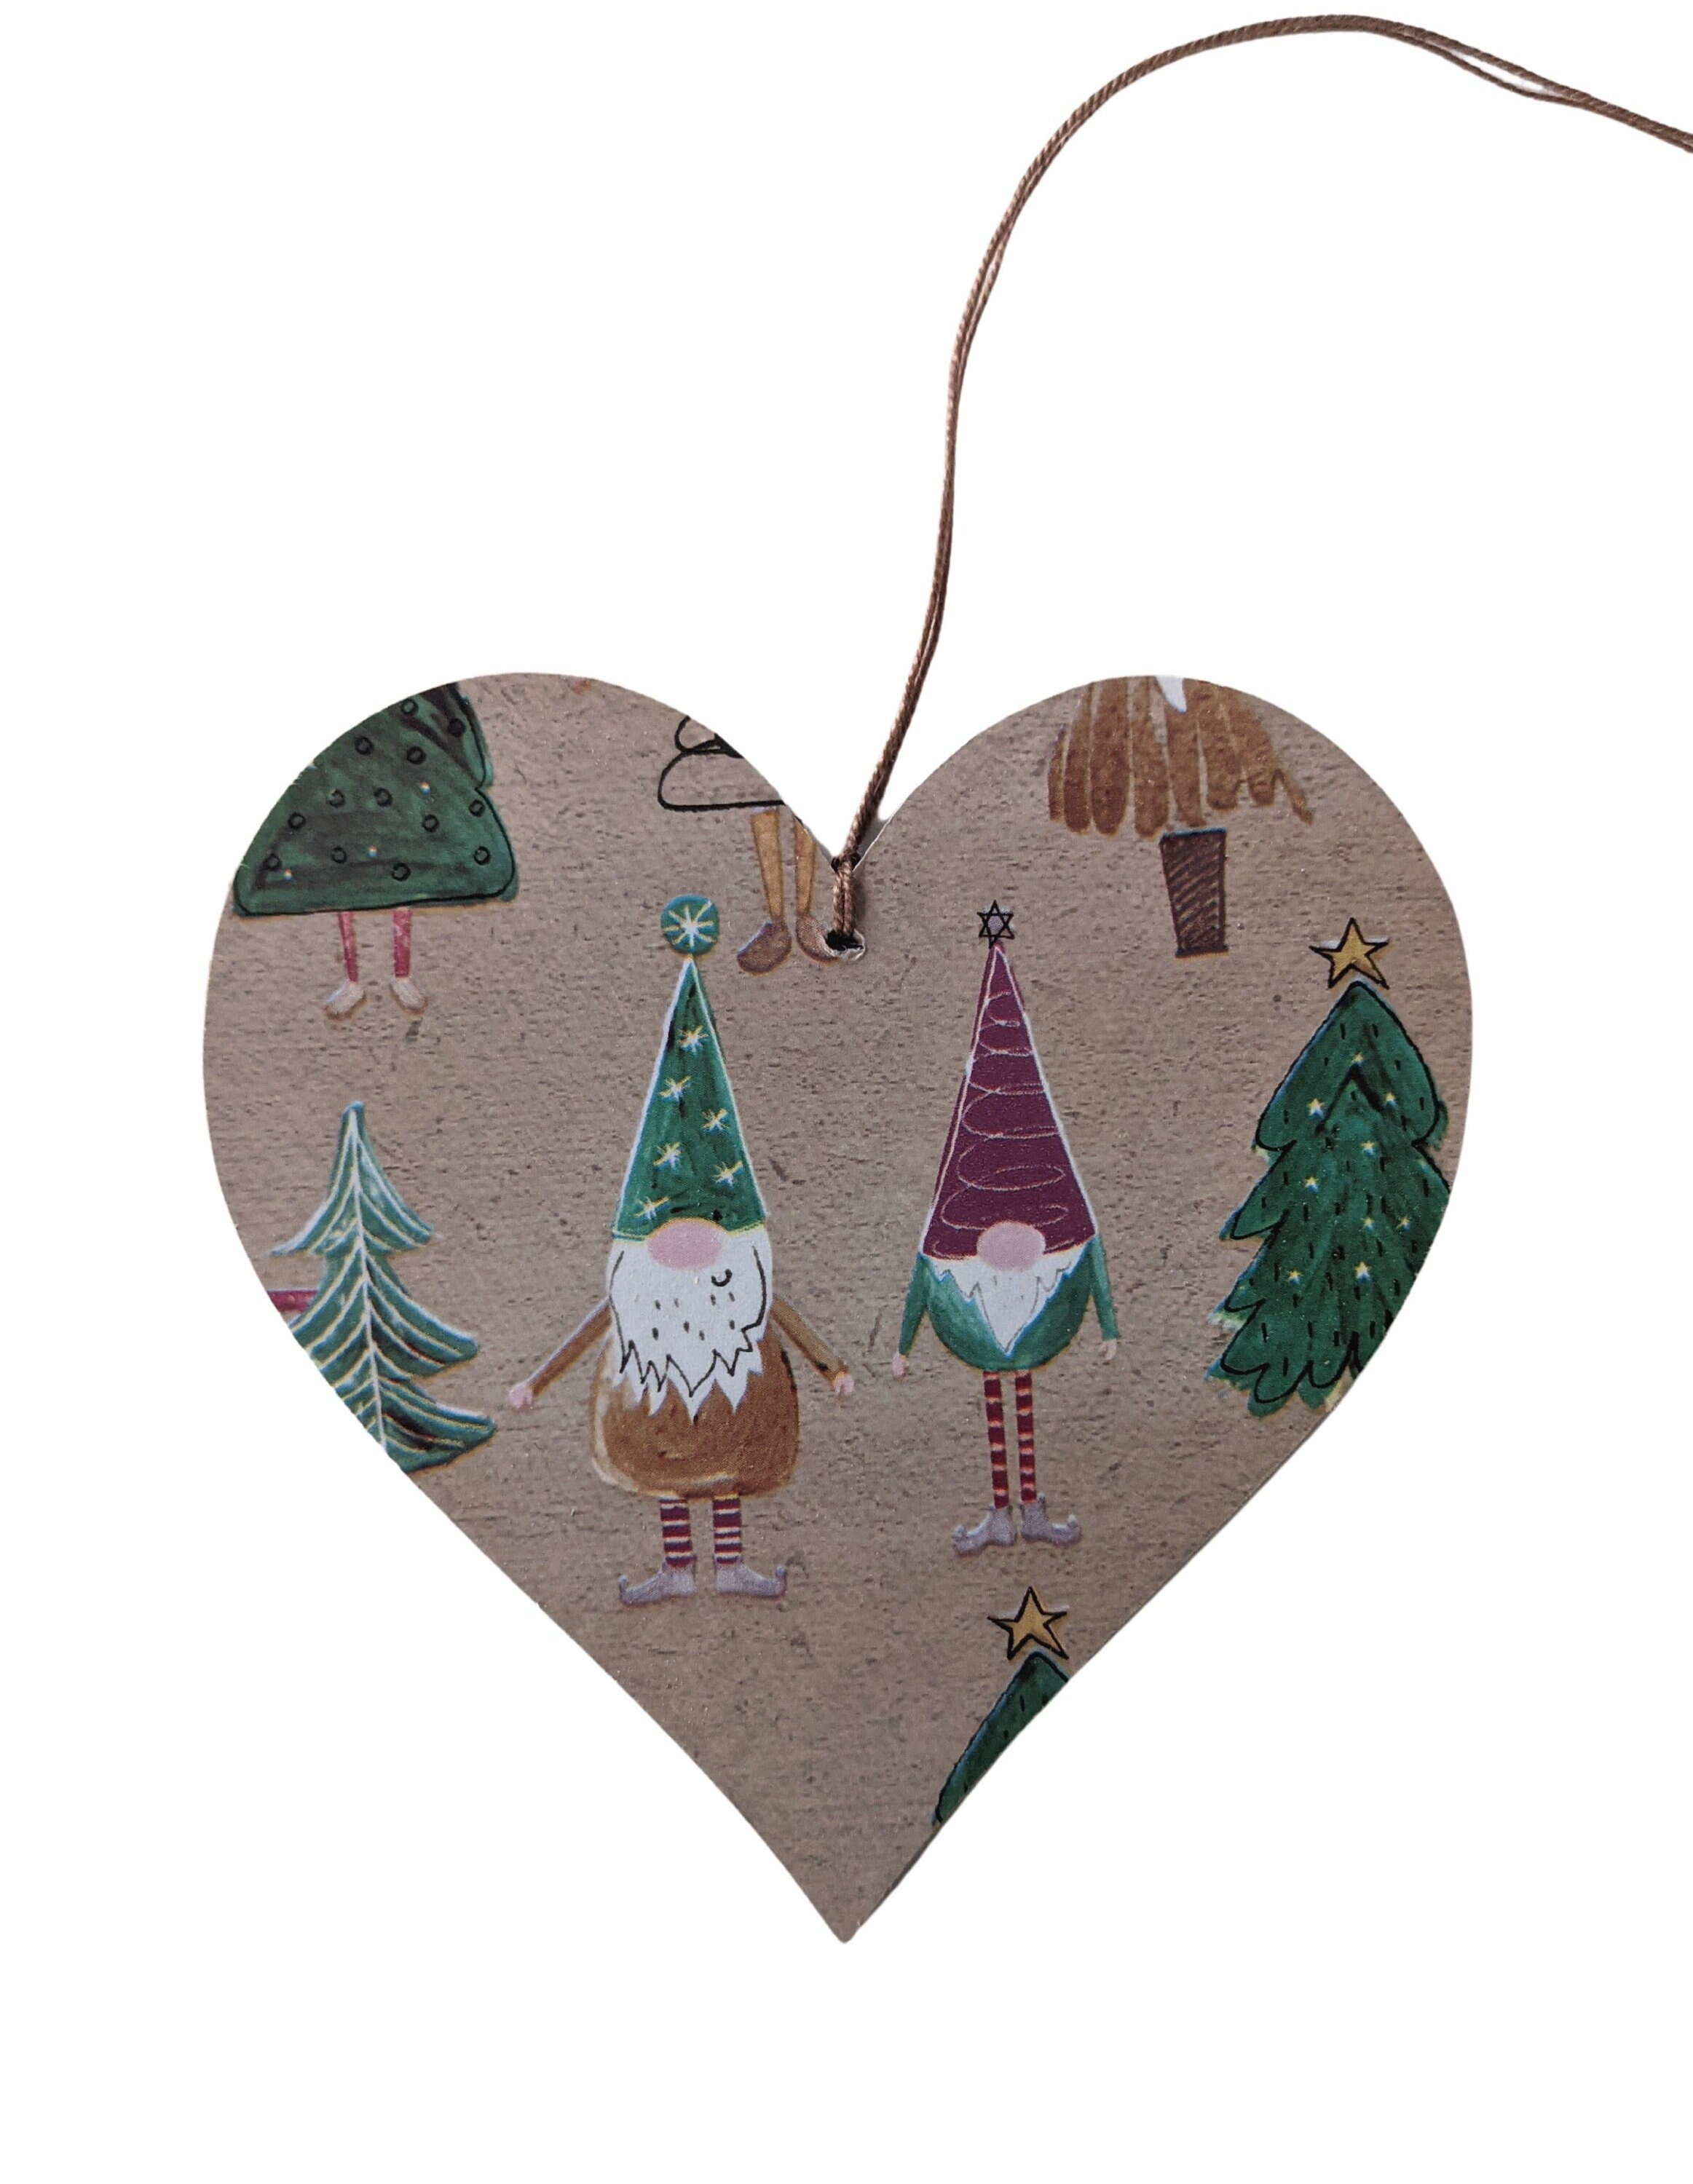 The Snowman Handmade wooden hanging Heart Christmas Decoration 10cm 